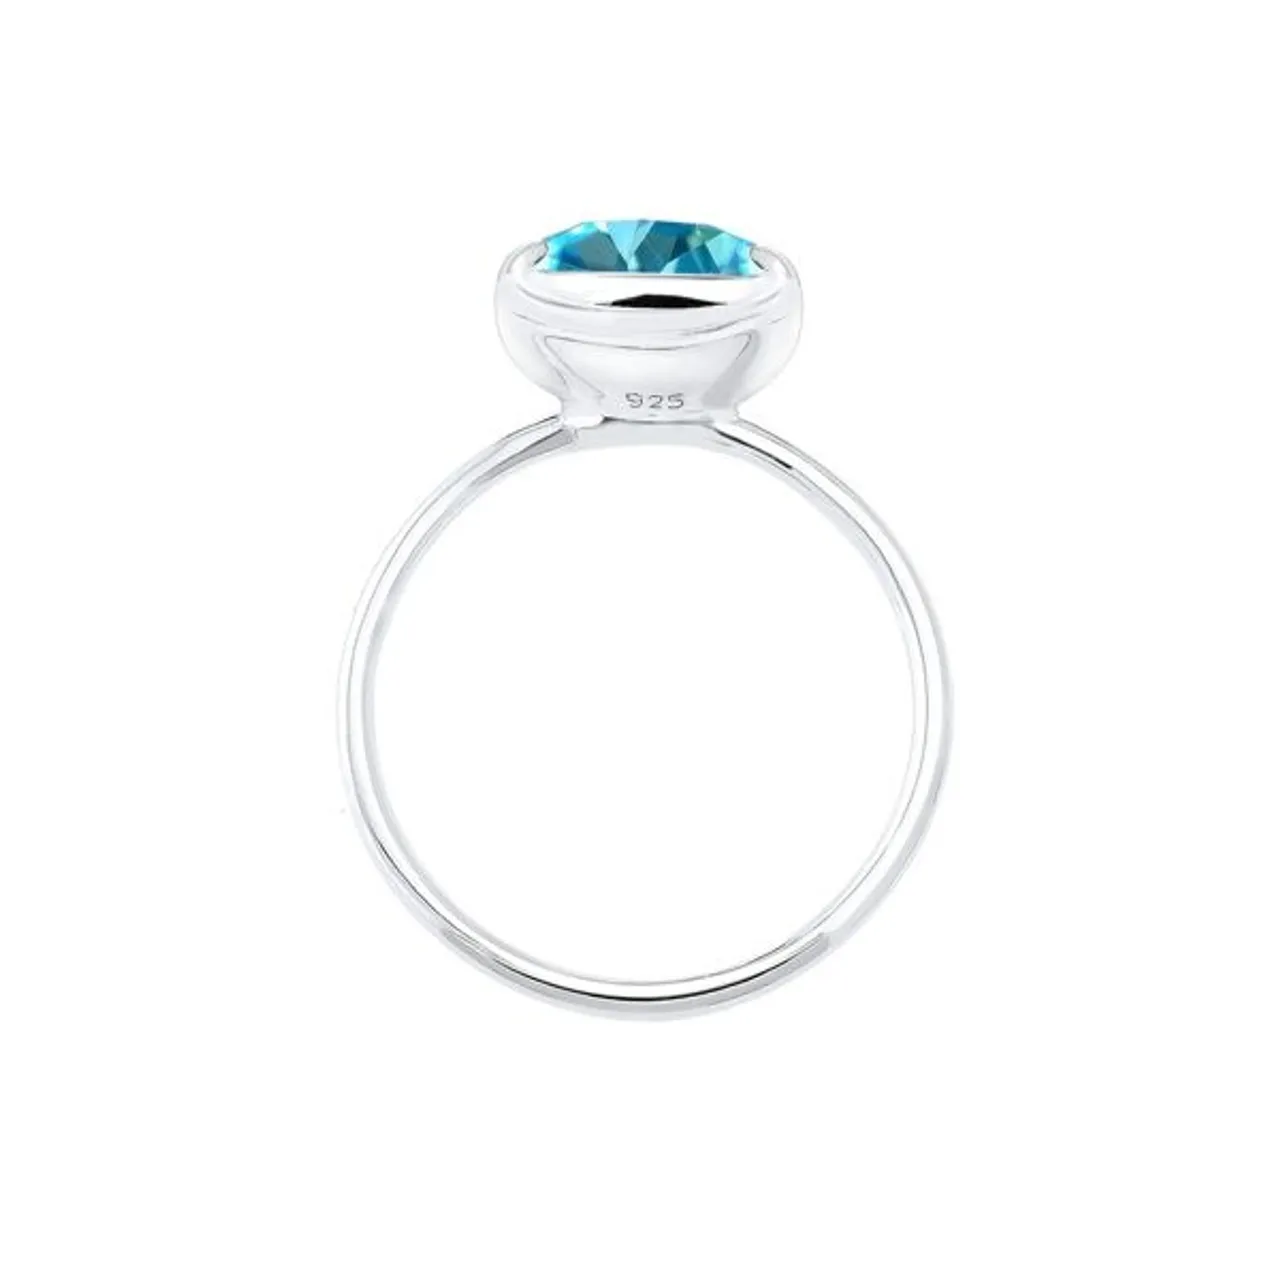 Verlobungsring ELLI "mit einzigartigem Kristall in Hellblau" Fingerringe Gr. 54 mm, Silber 925 (Sterlingsilber), 1 mm, silberfarben (silber, hellblau)...